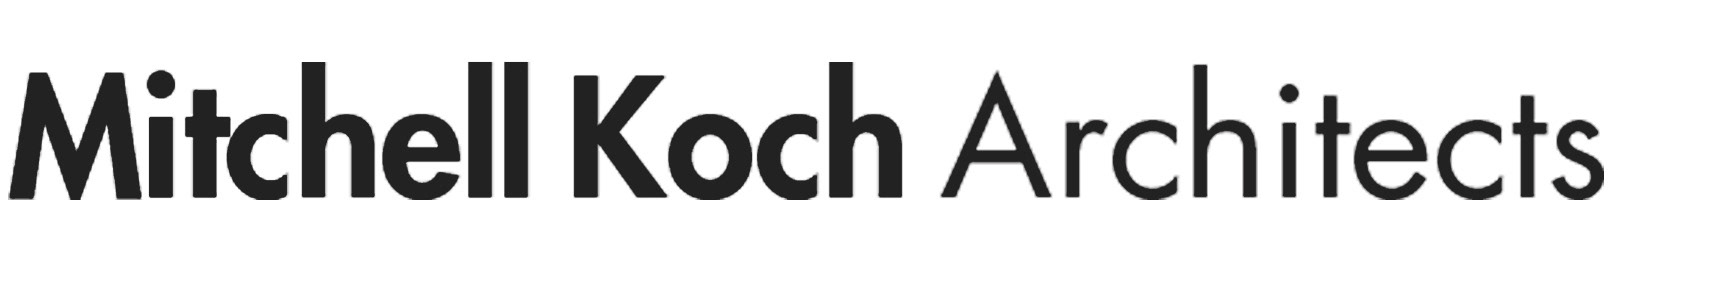 Mitchell Koch Architects